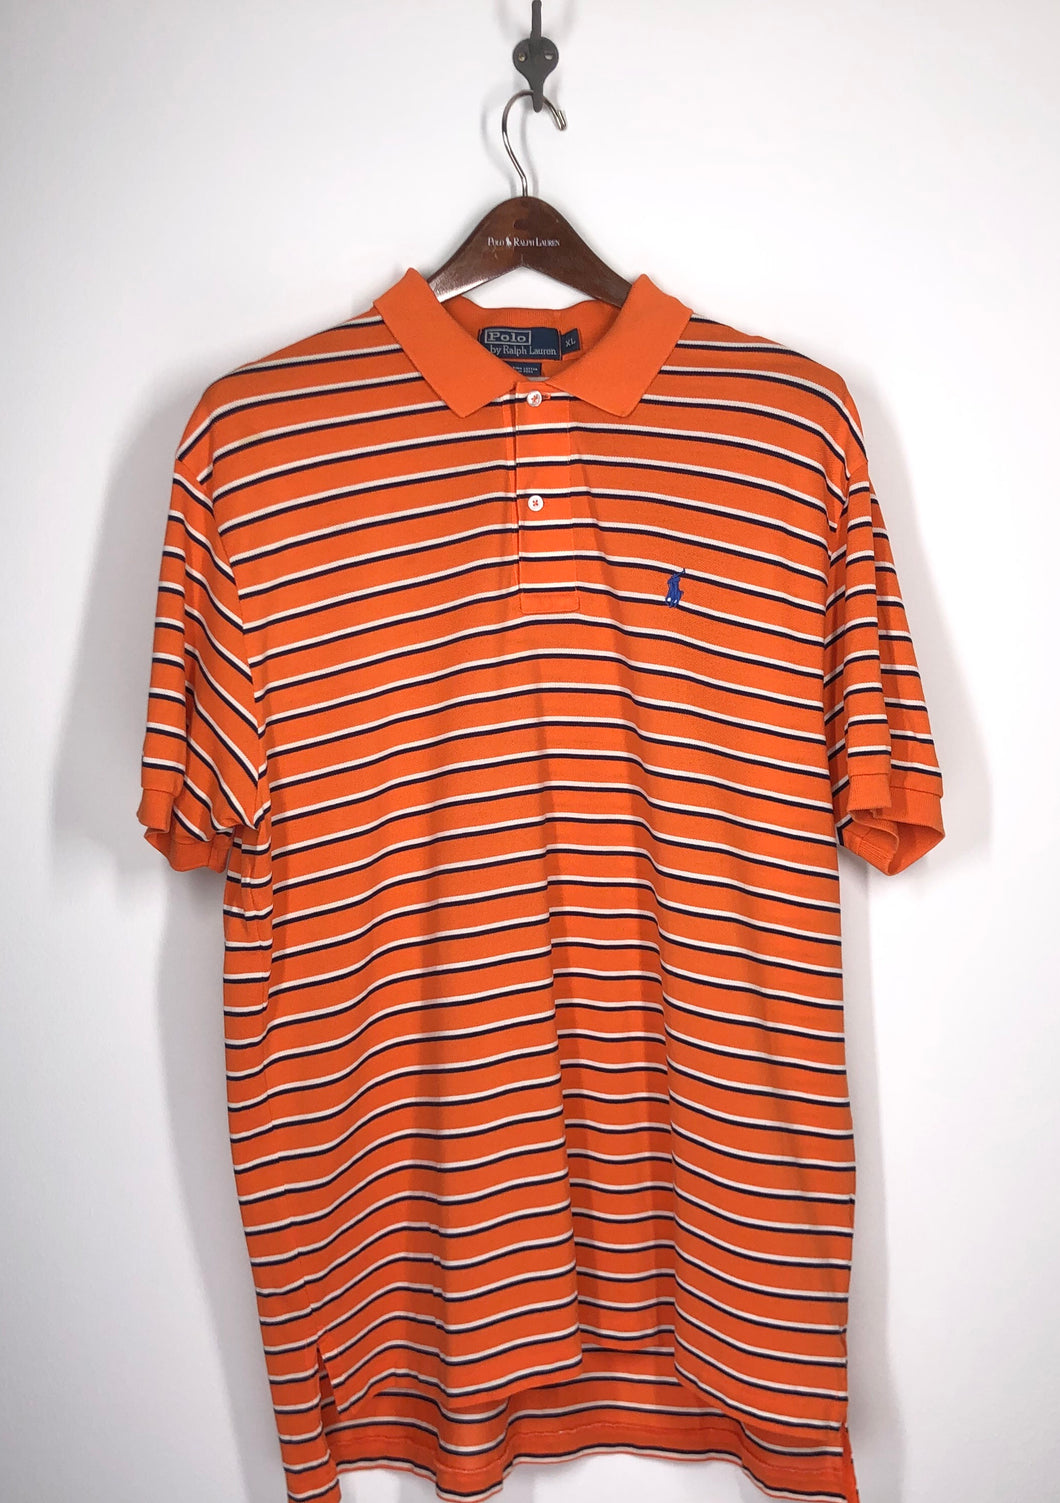 Polo by Ralph Lauren - XL - Orange/Blue/White - Iconic Mesh